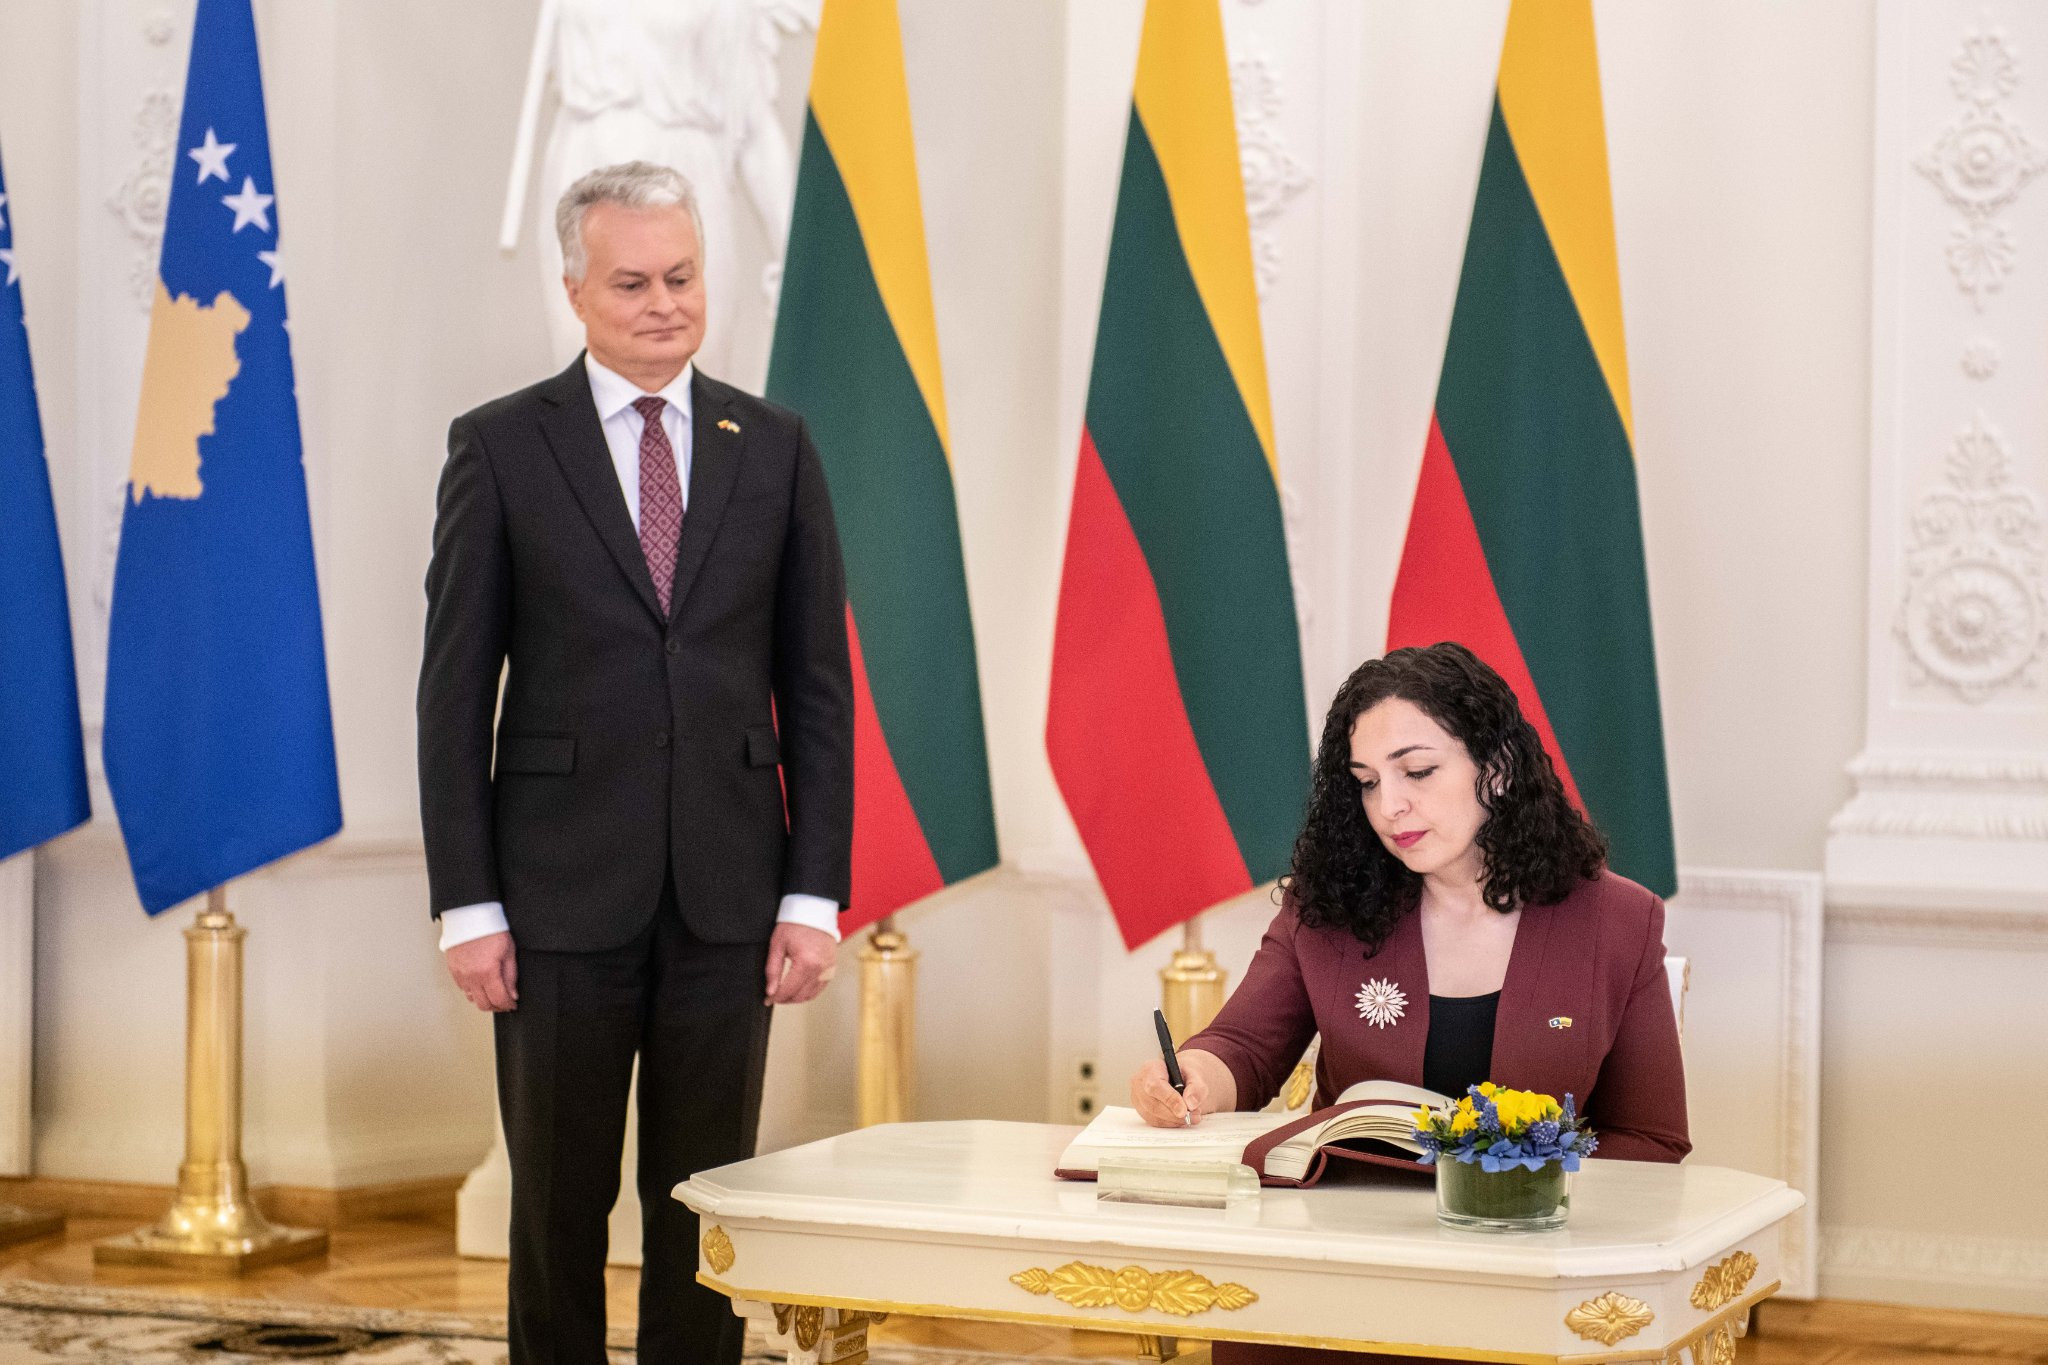 President Osmani was received by the President of Lithuania Gitanas Nausėda